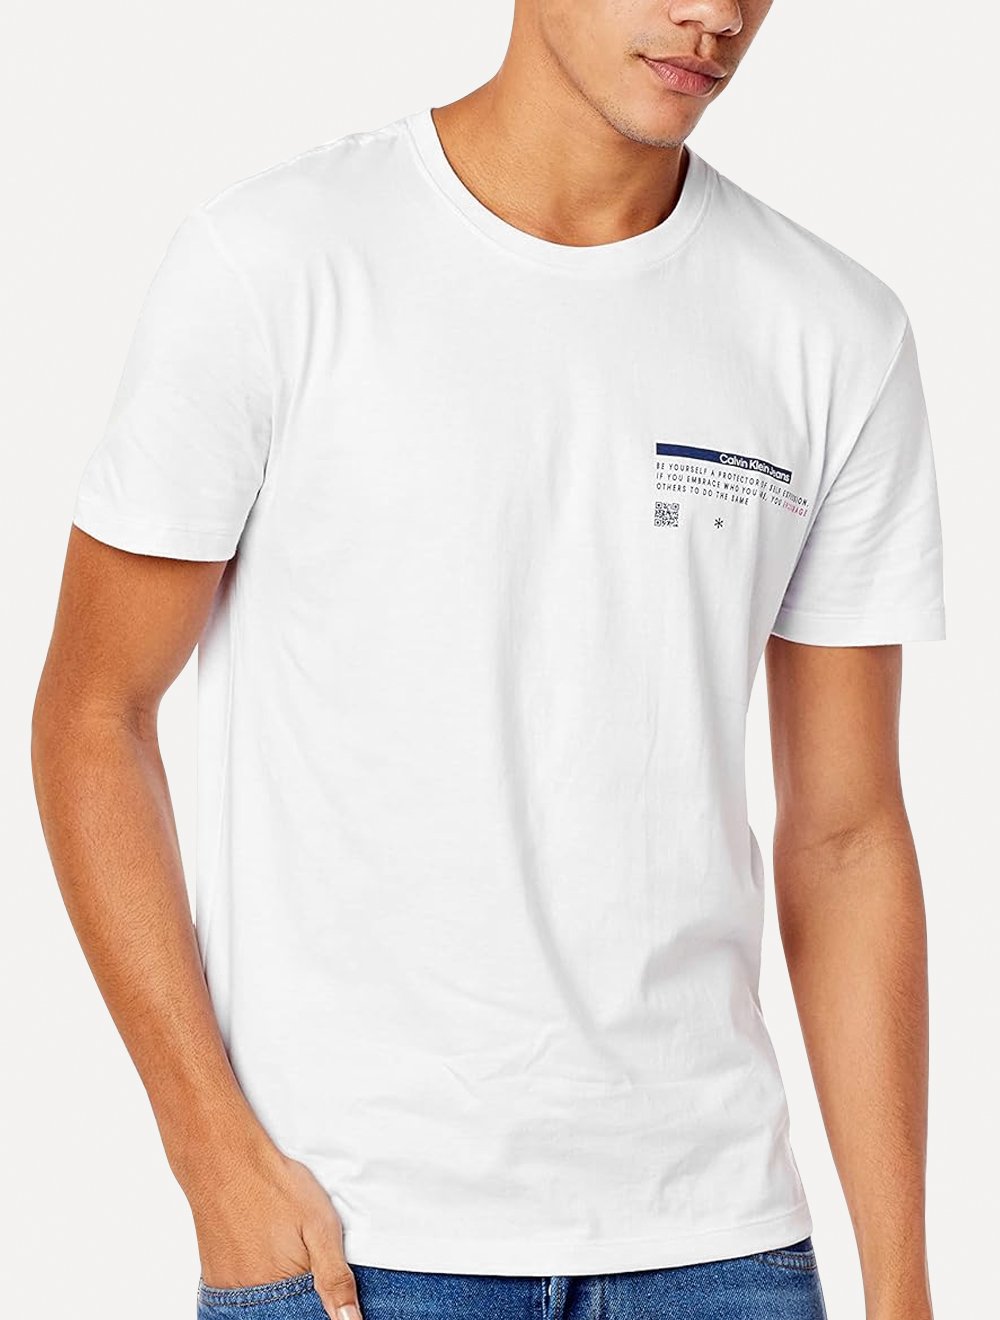 Camiseta Calvin Klein Jeans Masculina Self Expression Branca